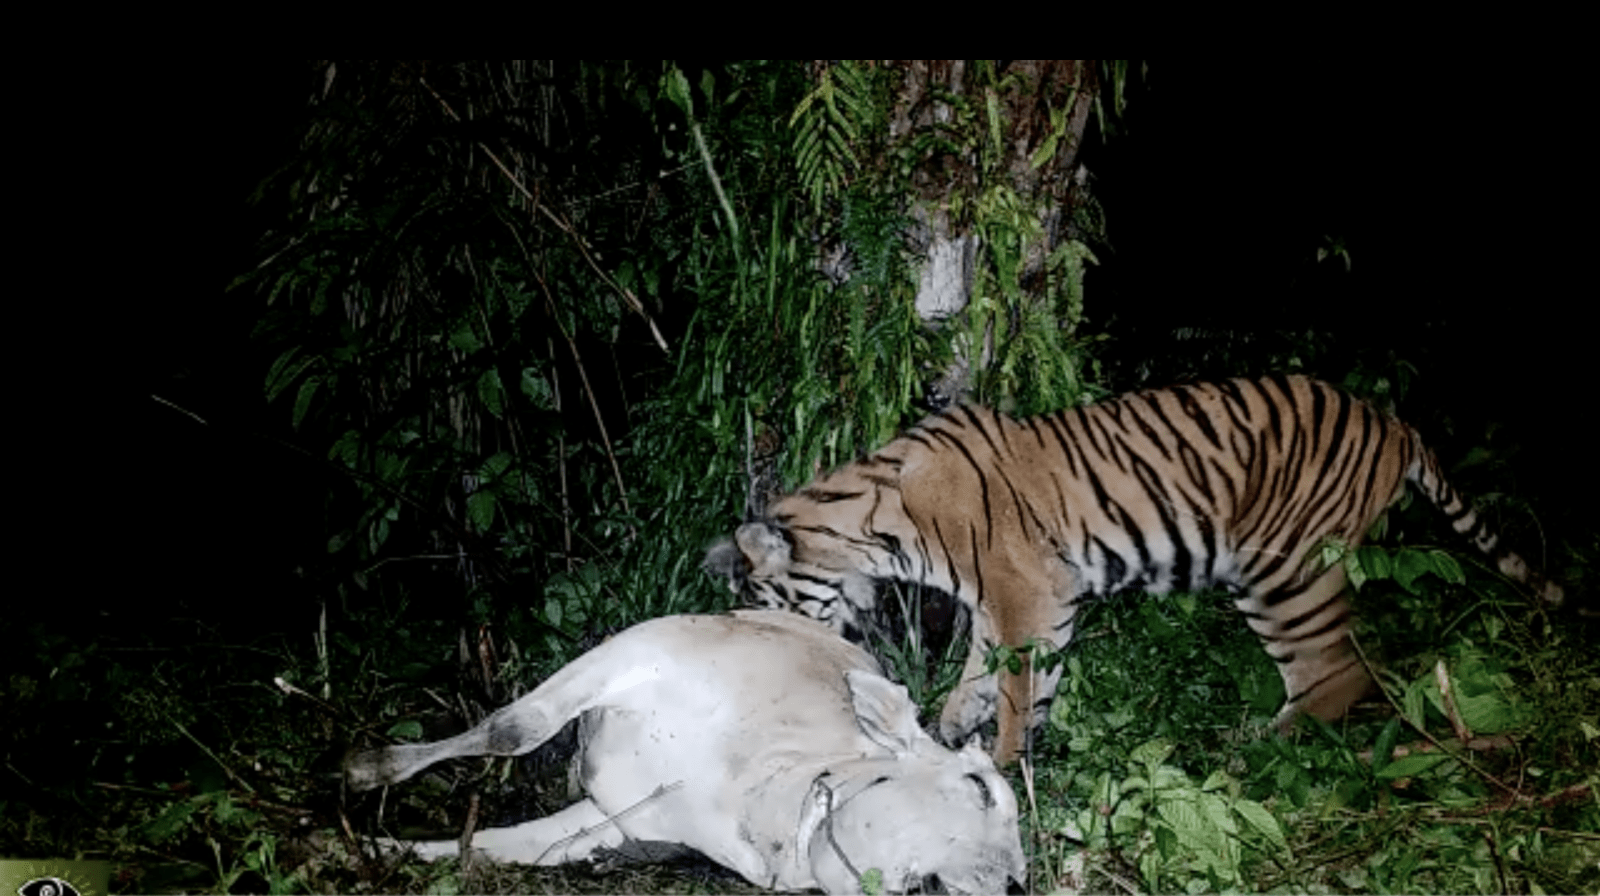 Harimau sumatera tertangkap kamera jebak sedang memangsa umpan berupa bangkai ternak warga. | Foto: BBKSDA Sumatra Utara Wilayah I Stabat